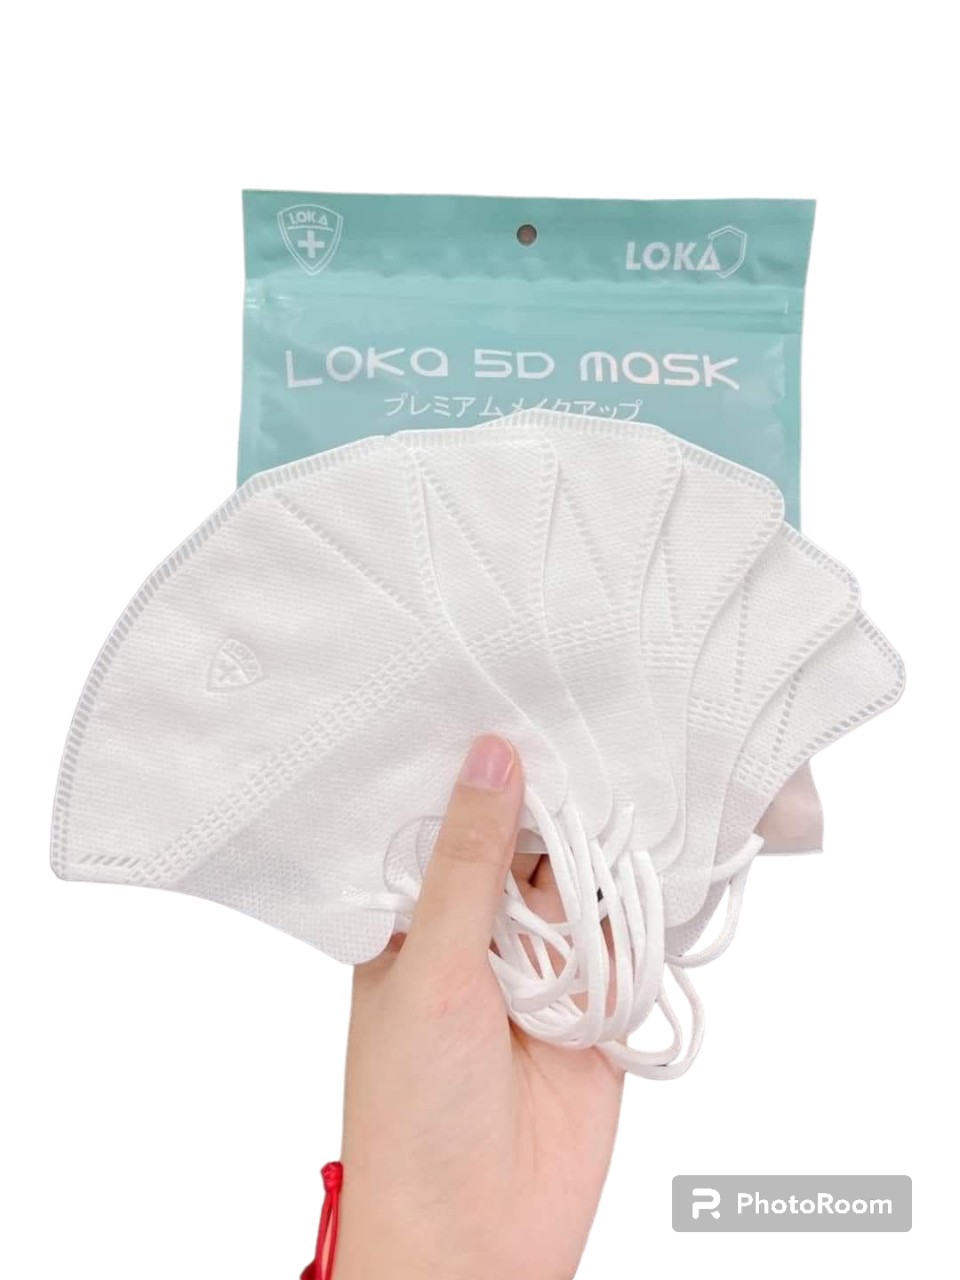 [200 cái] Khẩu trang 5D Loka mask - AnNa